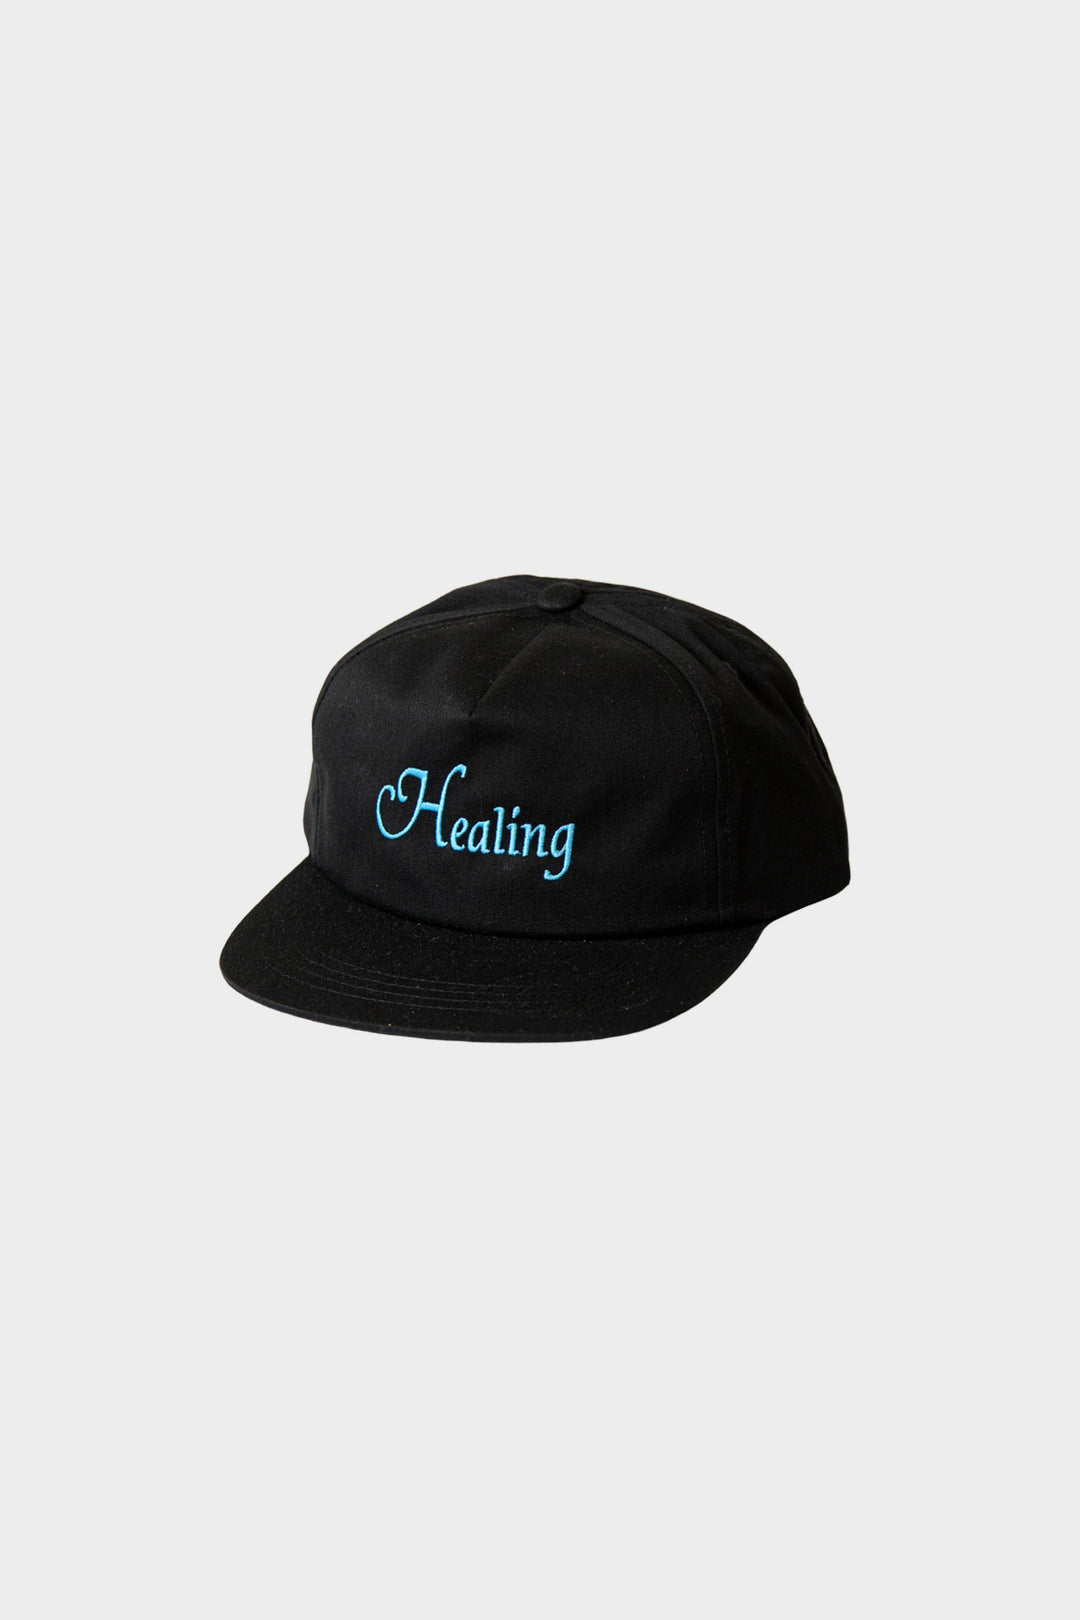 Healing Hat - Hats - DNO